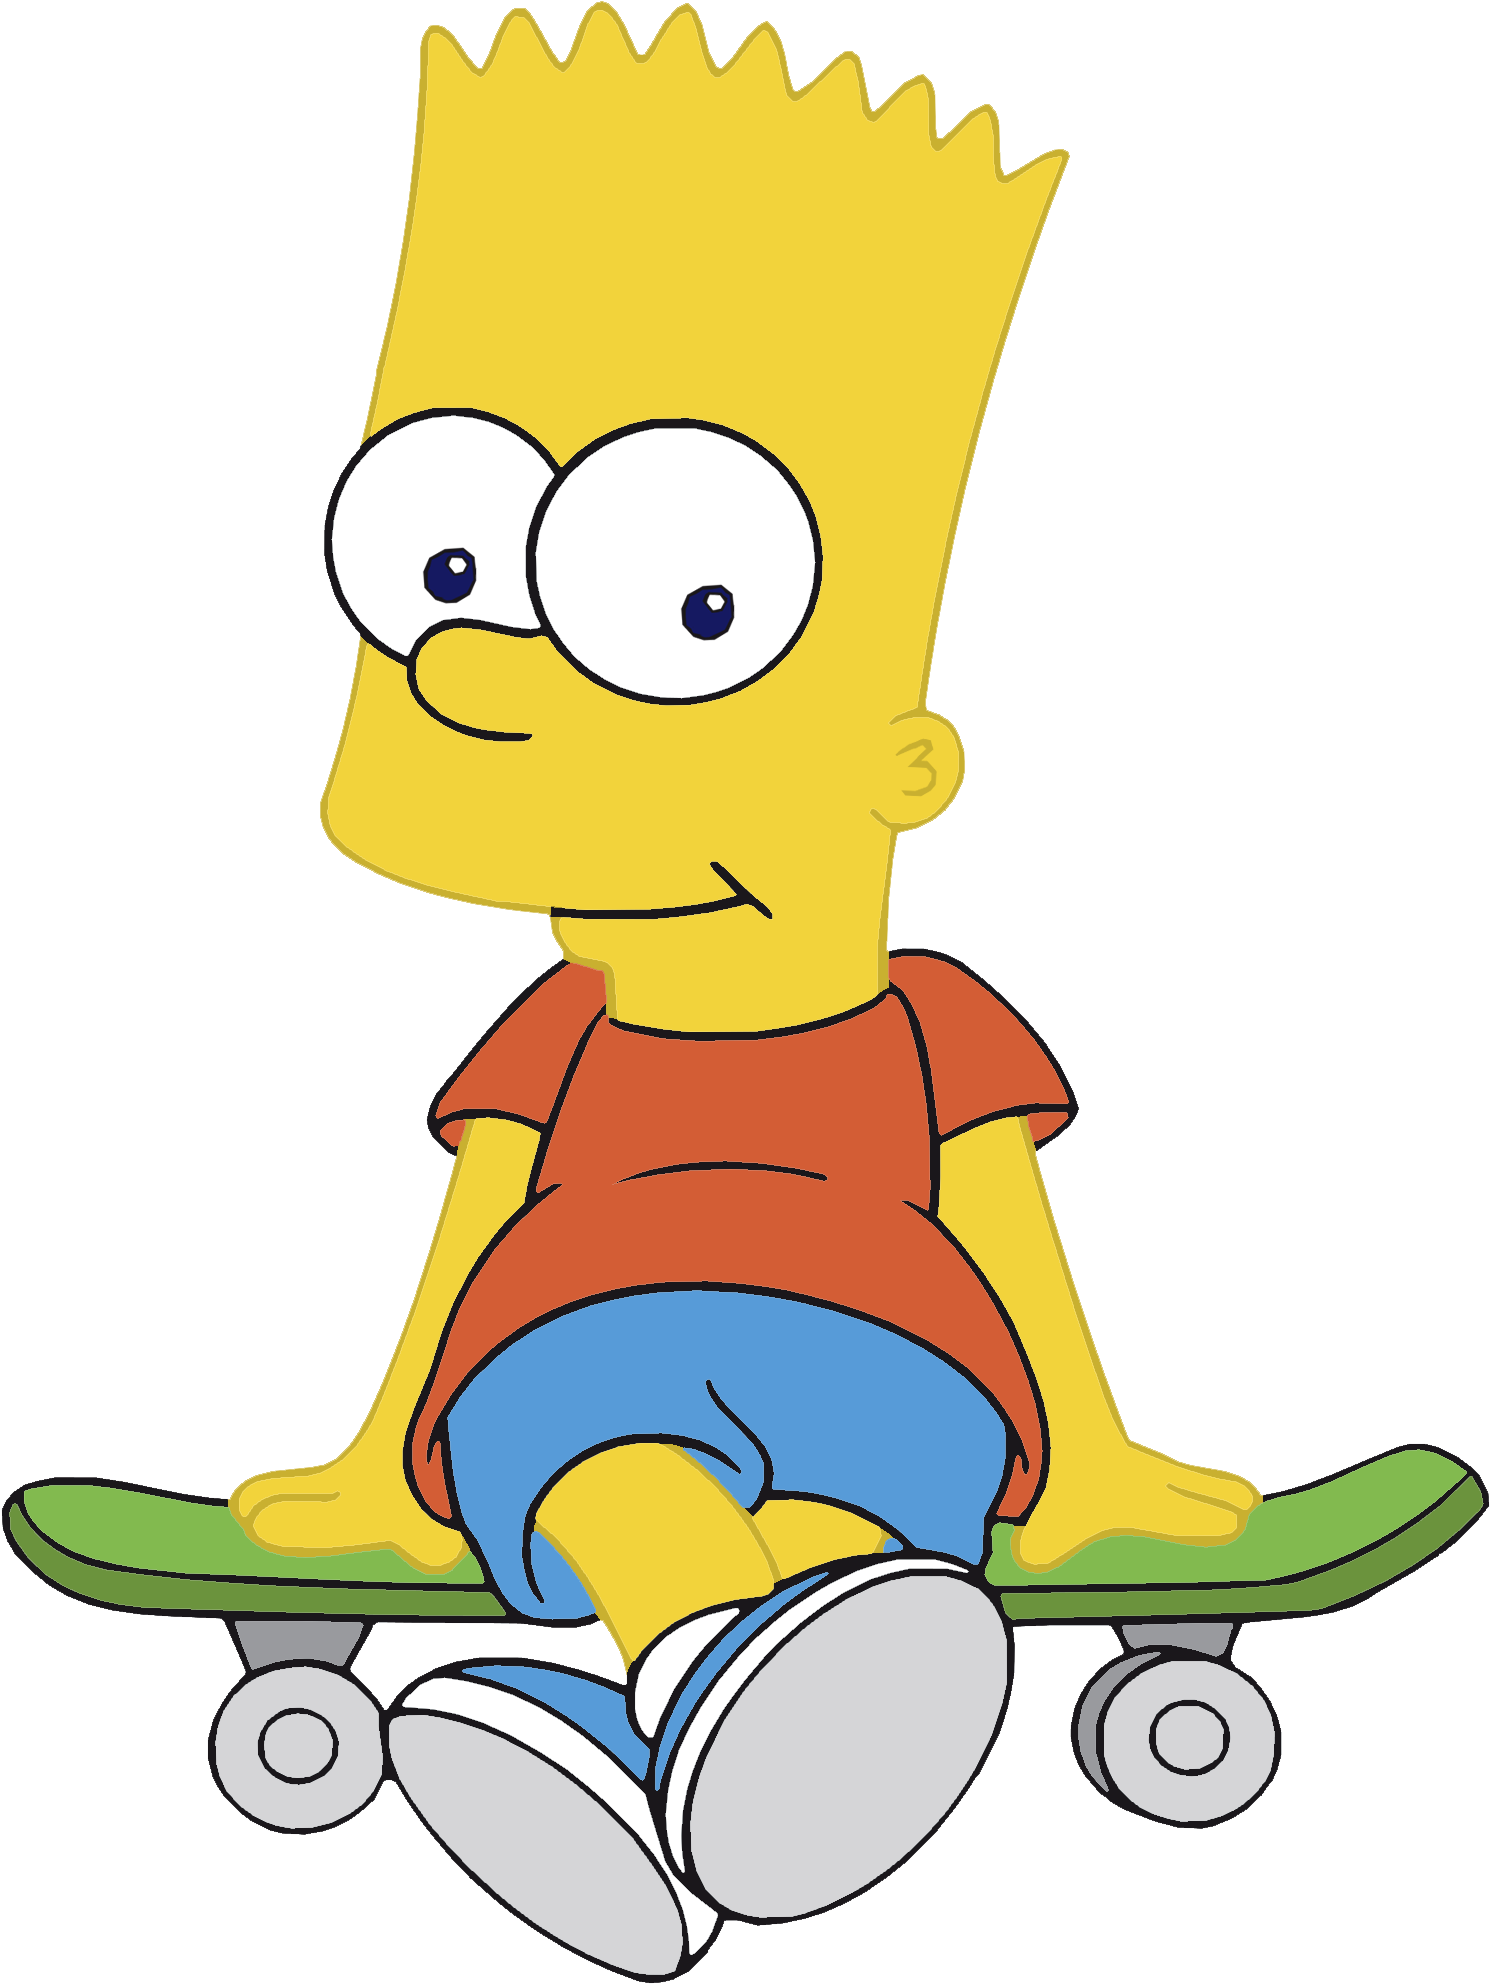 Arthony70100 21 0 Bart Simpson In Pnf/milo Murphy's - Bart Simpson Sitting On Skateboard (2400x2400)